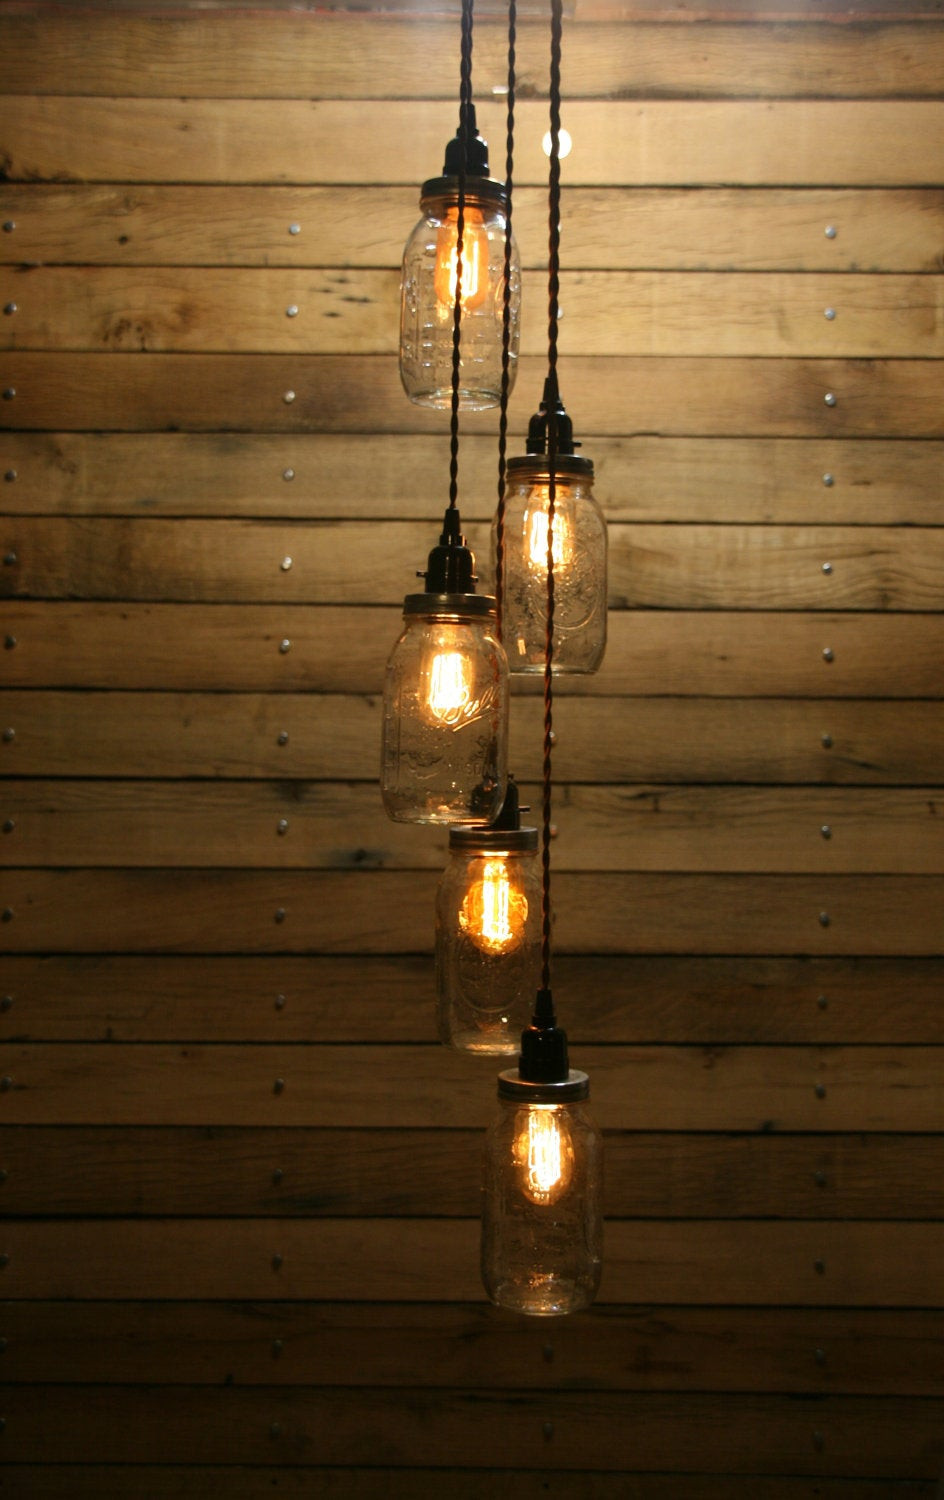 Best ideas about DIY Lighting Kits
. Save or Pin DIY 5 Jar Pendant Light Mason Jar Chandelier by Now.